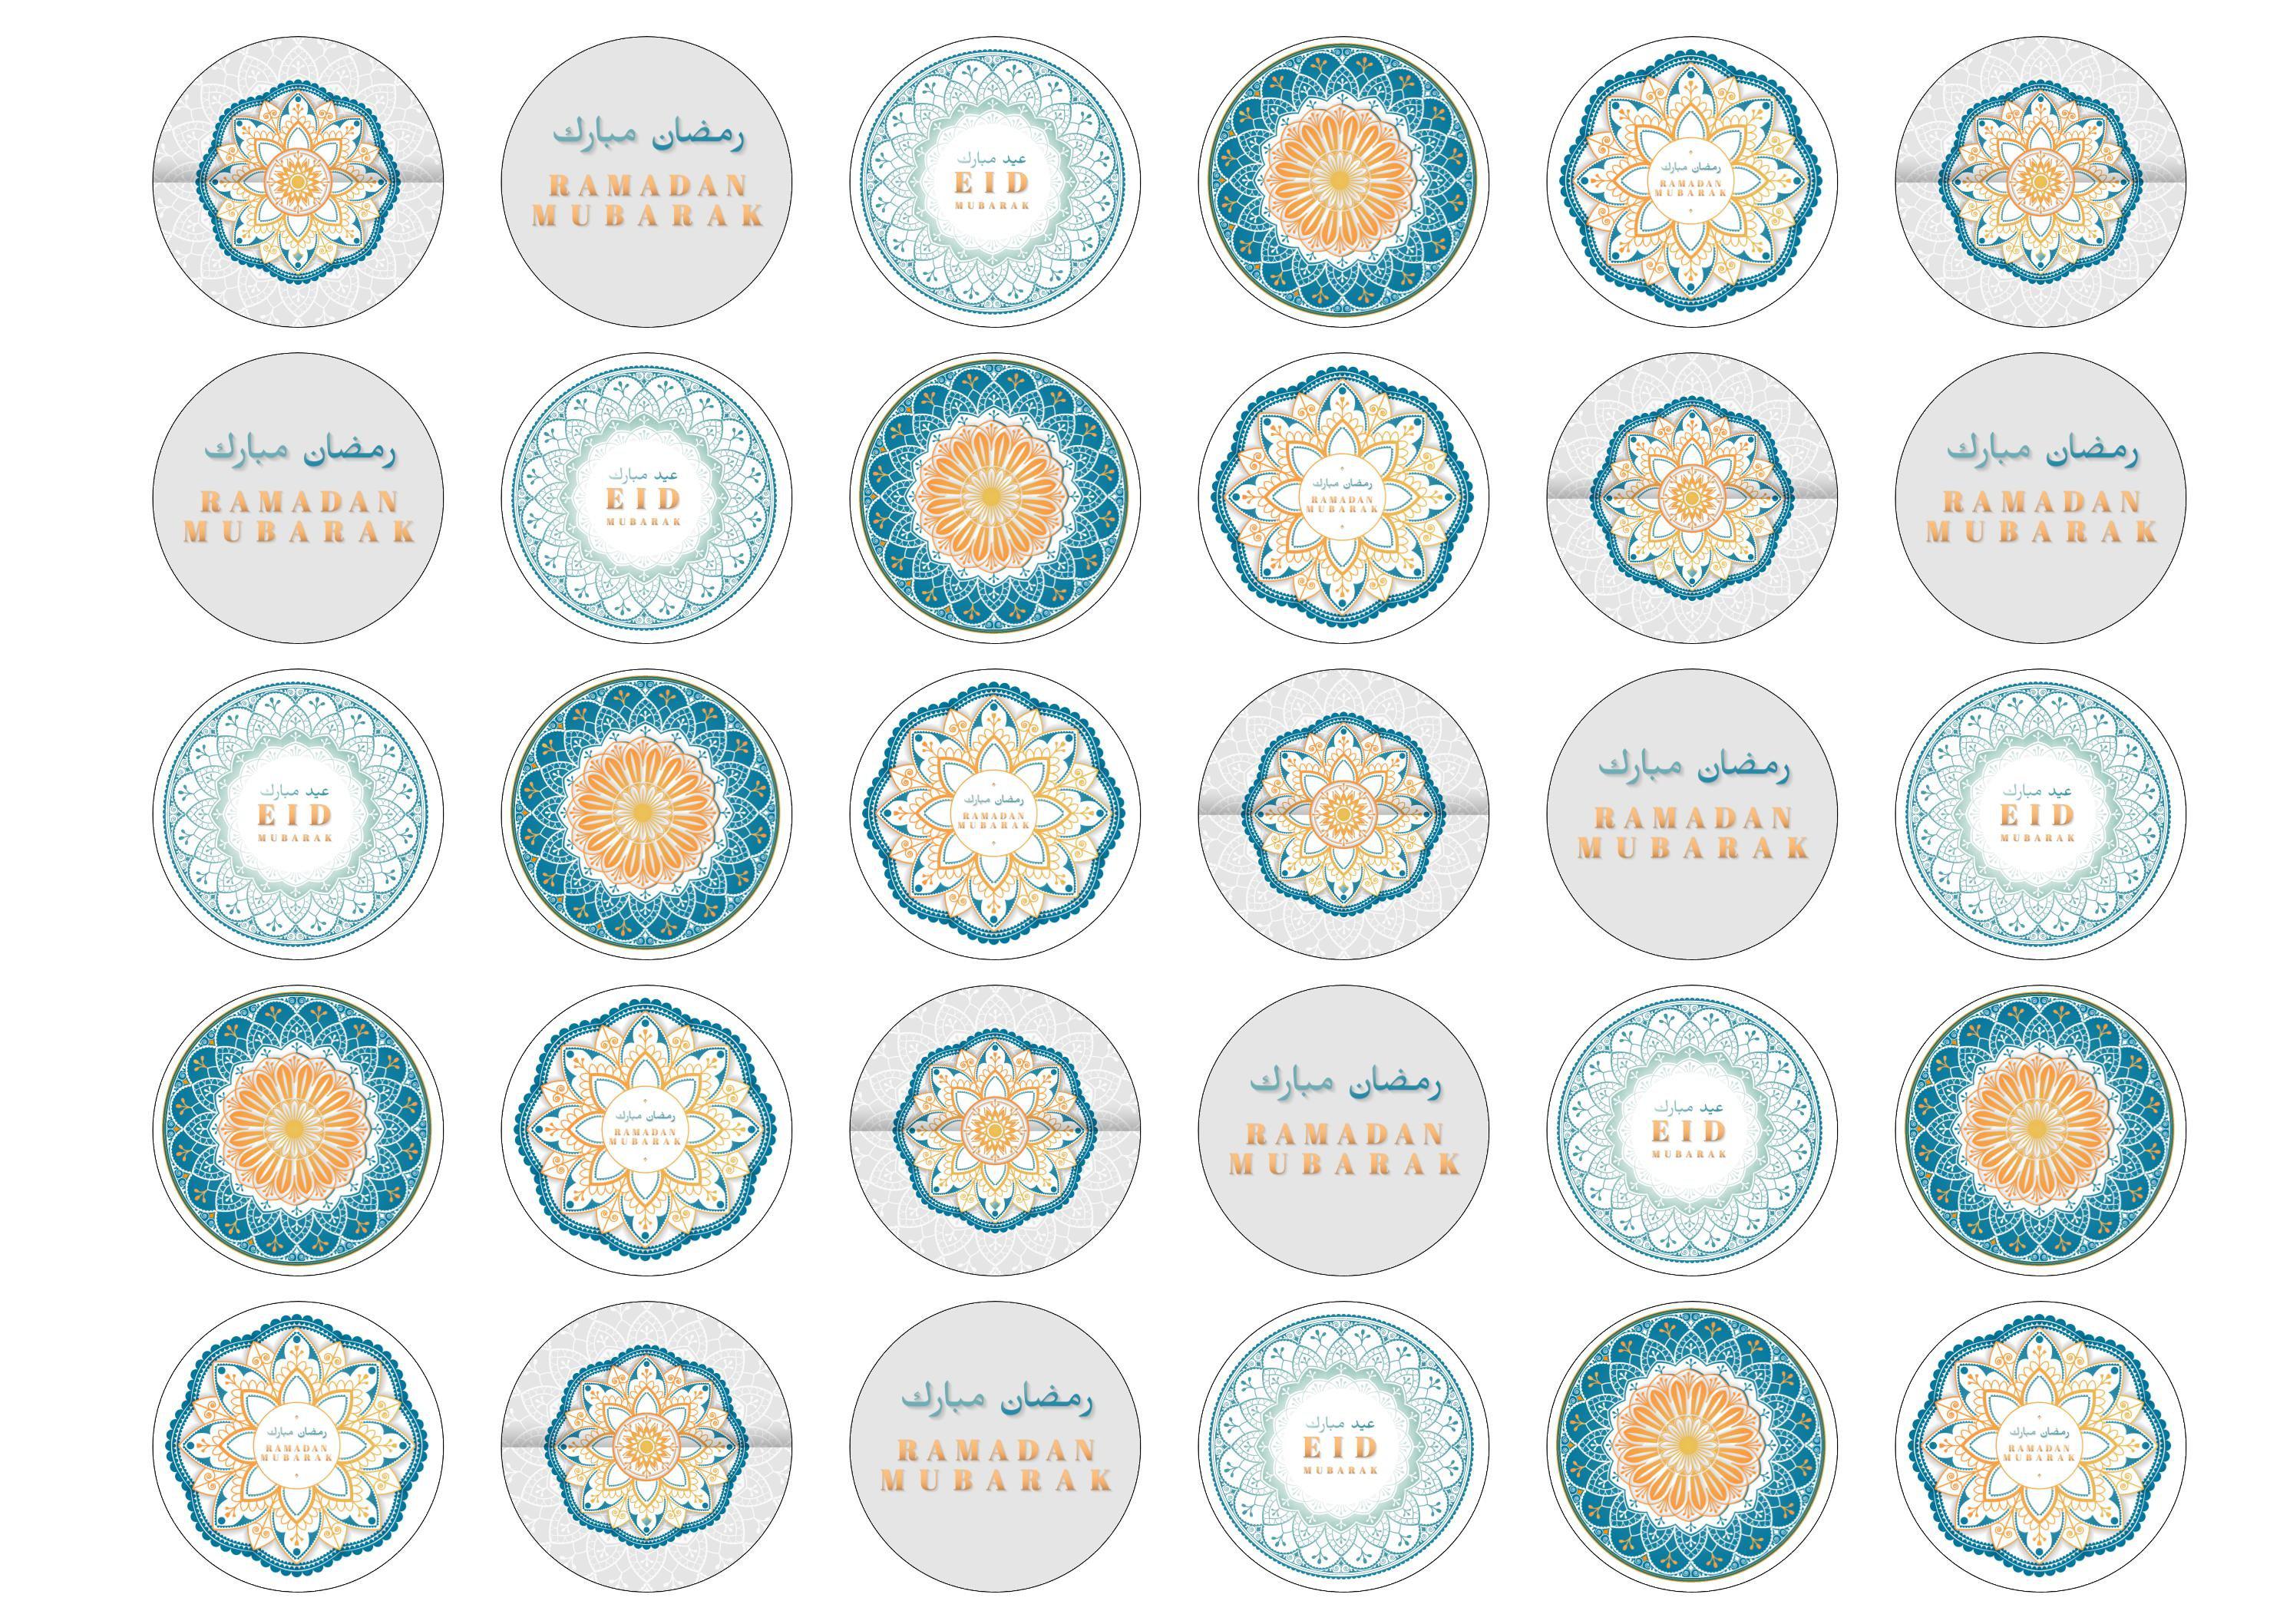 30 edible cupcake toppers with mandala design for Ramadan Mubarak and Eid Mubarak